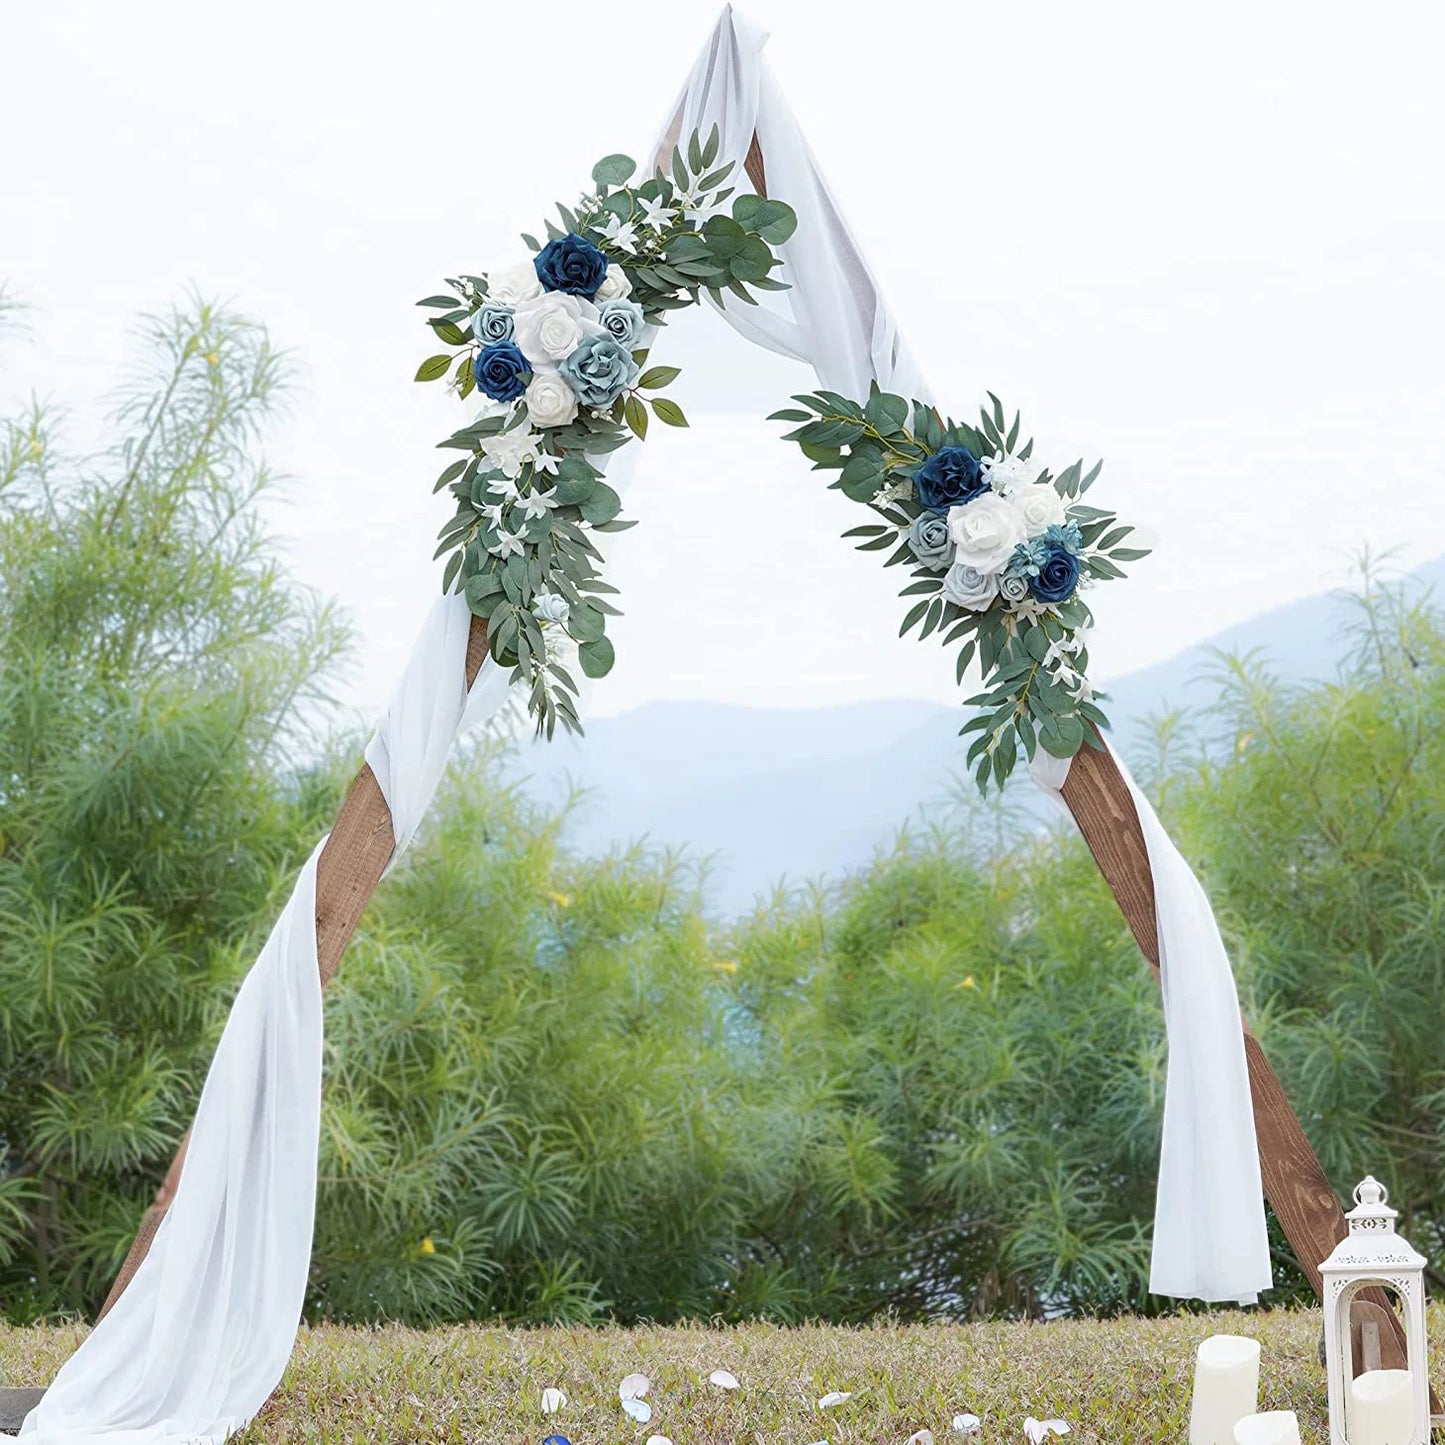 YANNEW KIT ARCH ARTIFICIAL DO CASEMO KIT BOHO Dusty Rose Azul Eucalipto Garland Drapes para decorações de casamento Sign de boas -vindas